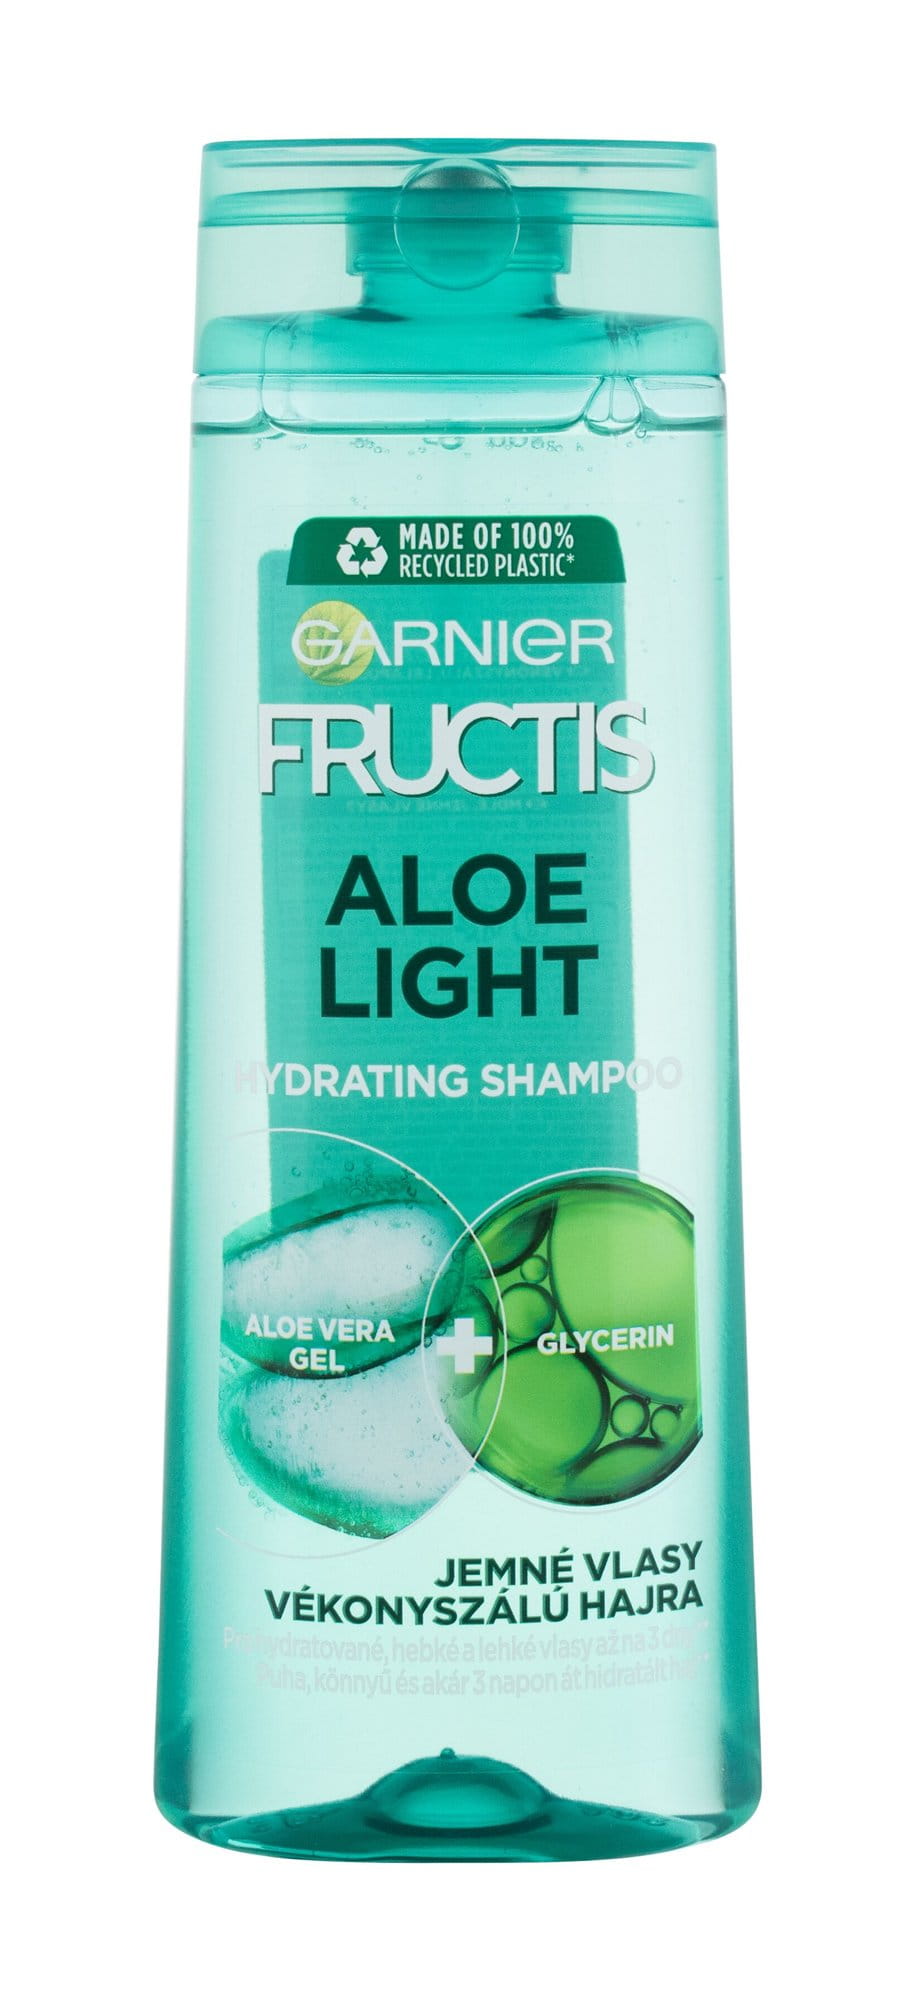 garnier fructis aloe szampon